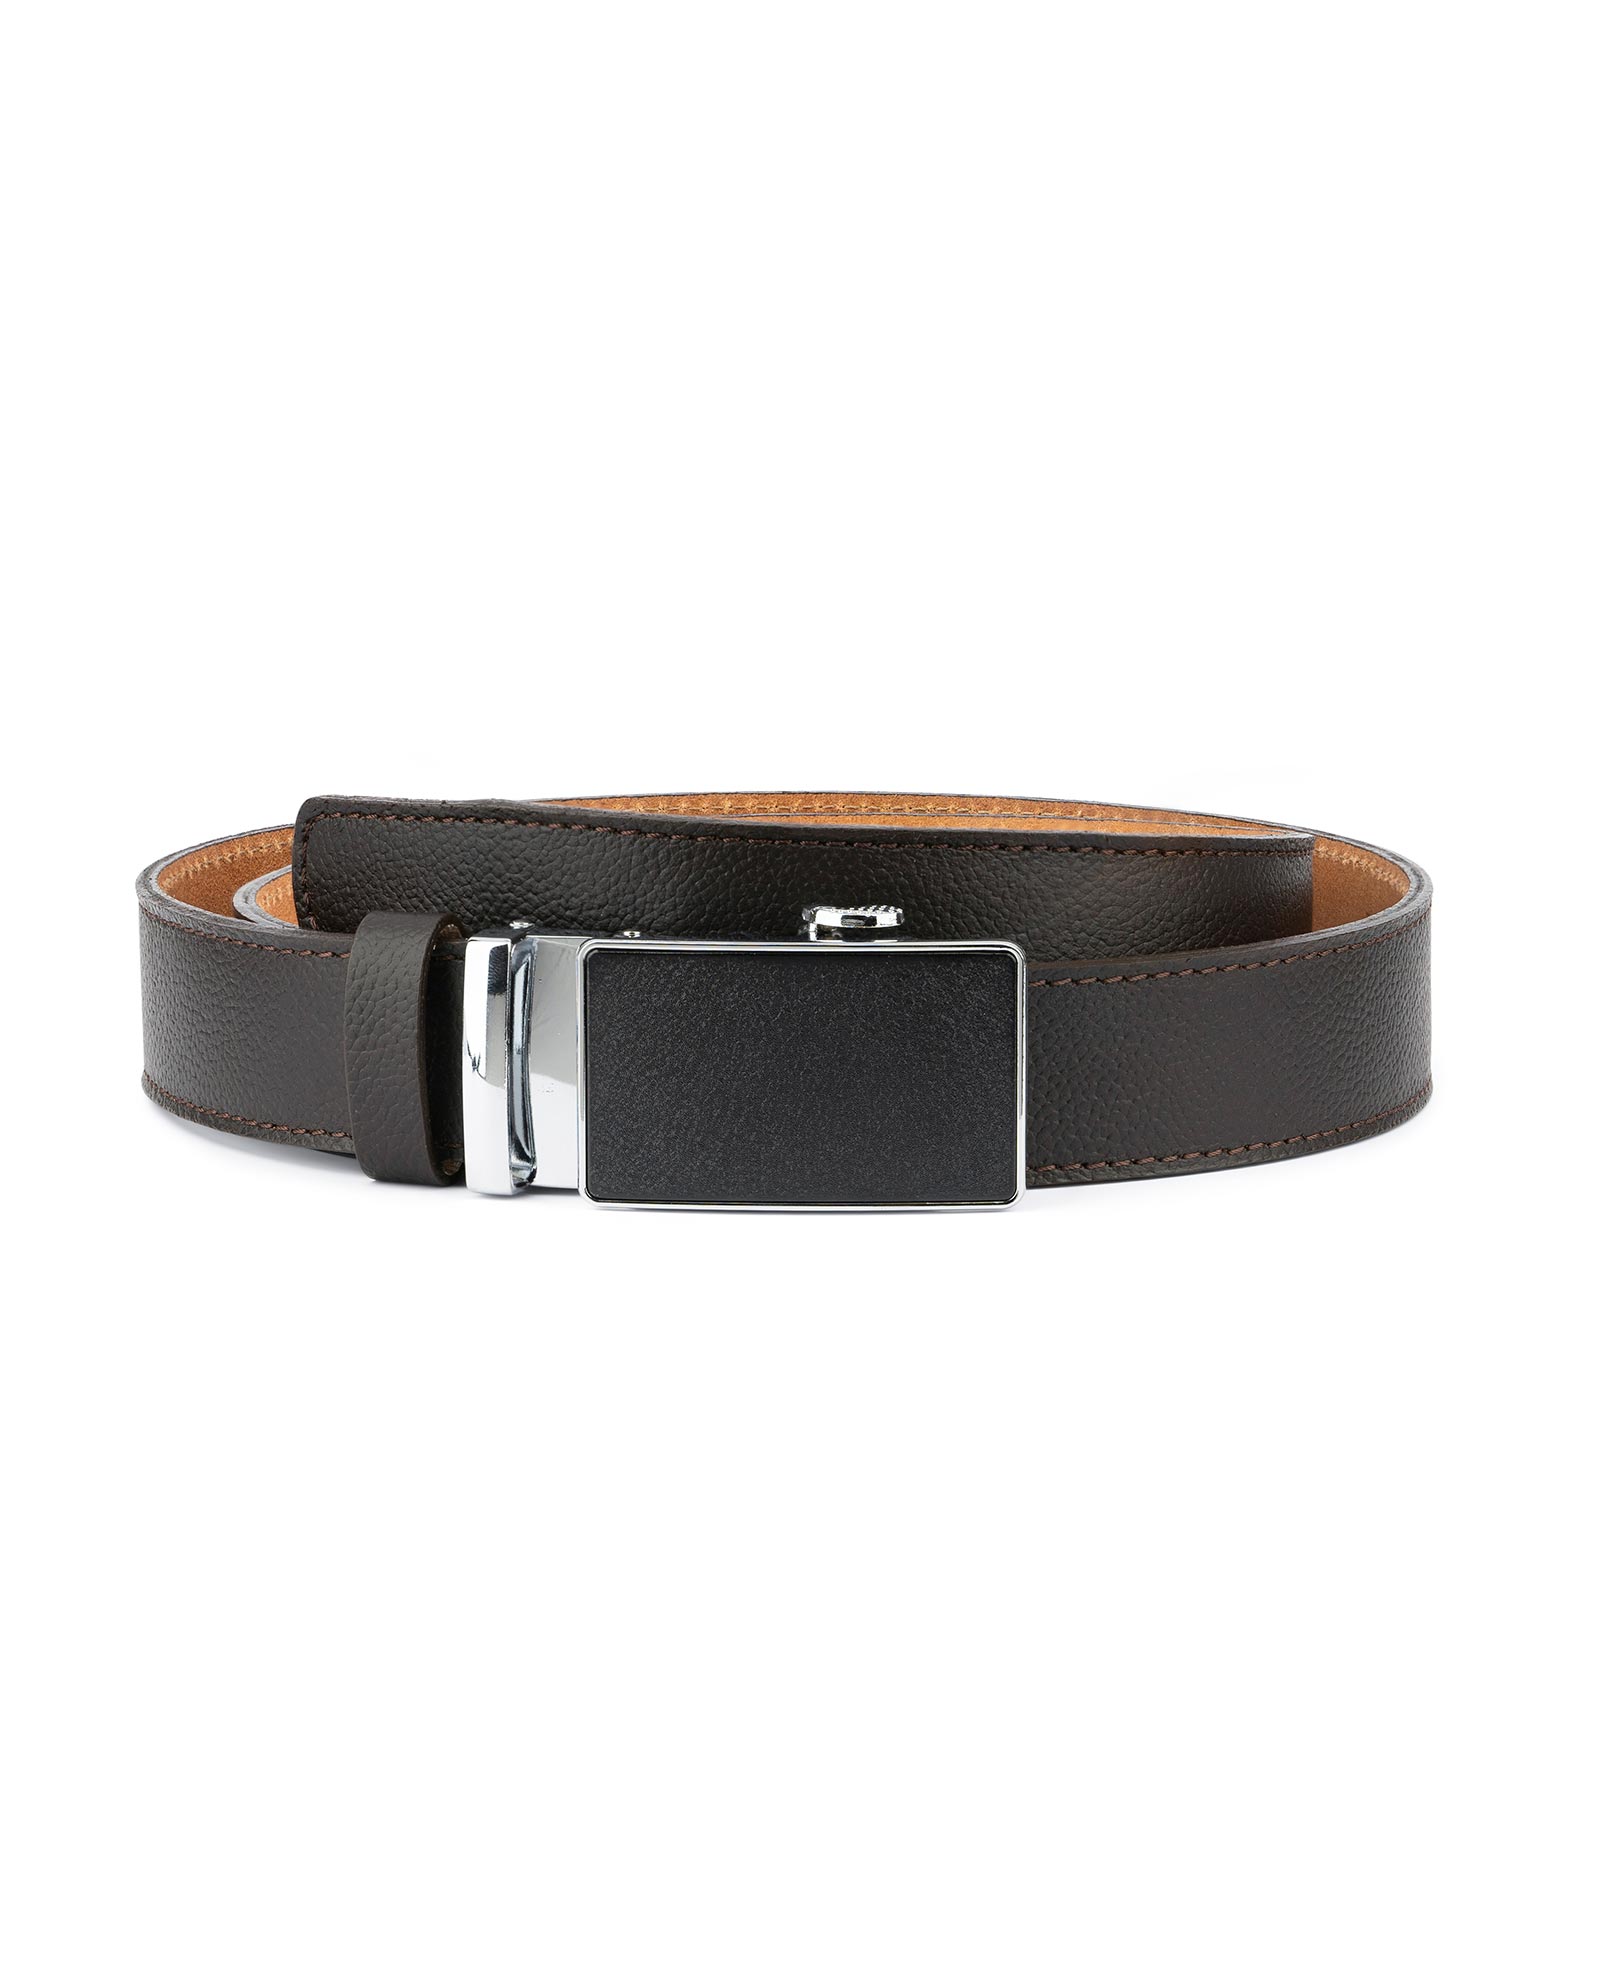 Buy Brown Automatic Buckle Belt for Men | LeatherBeltsOnline.com